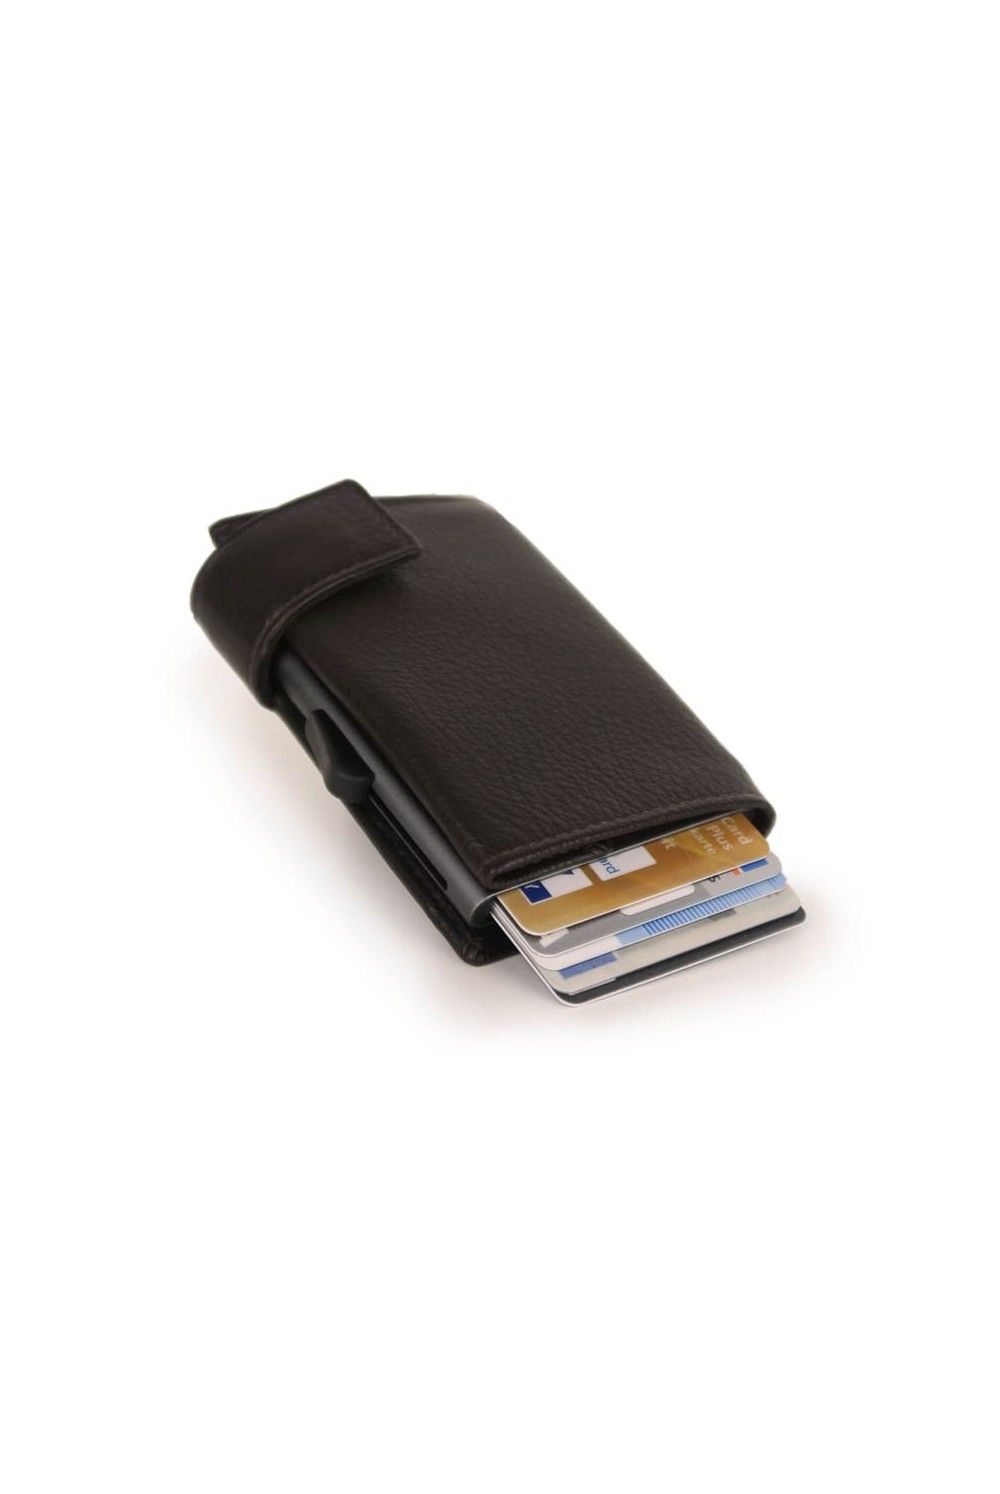 SecWal Card Case DK Leather dark Brown